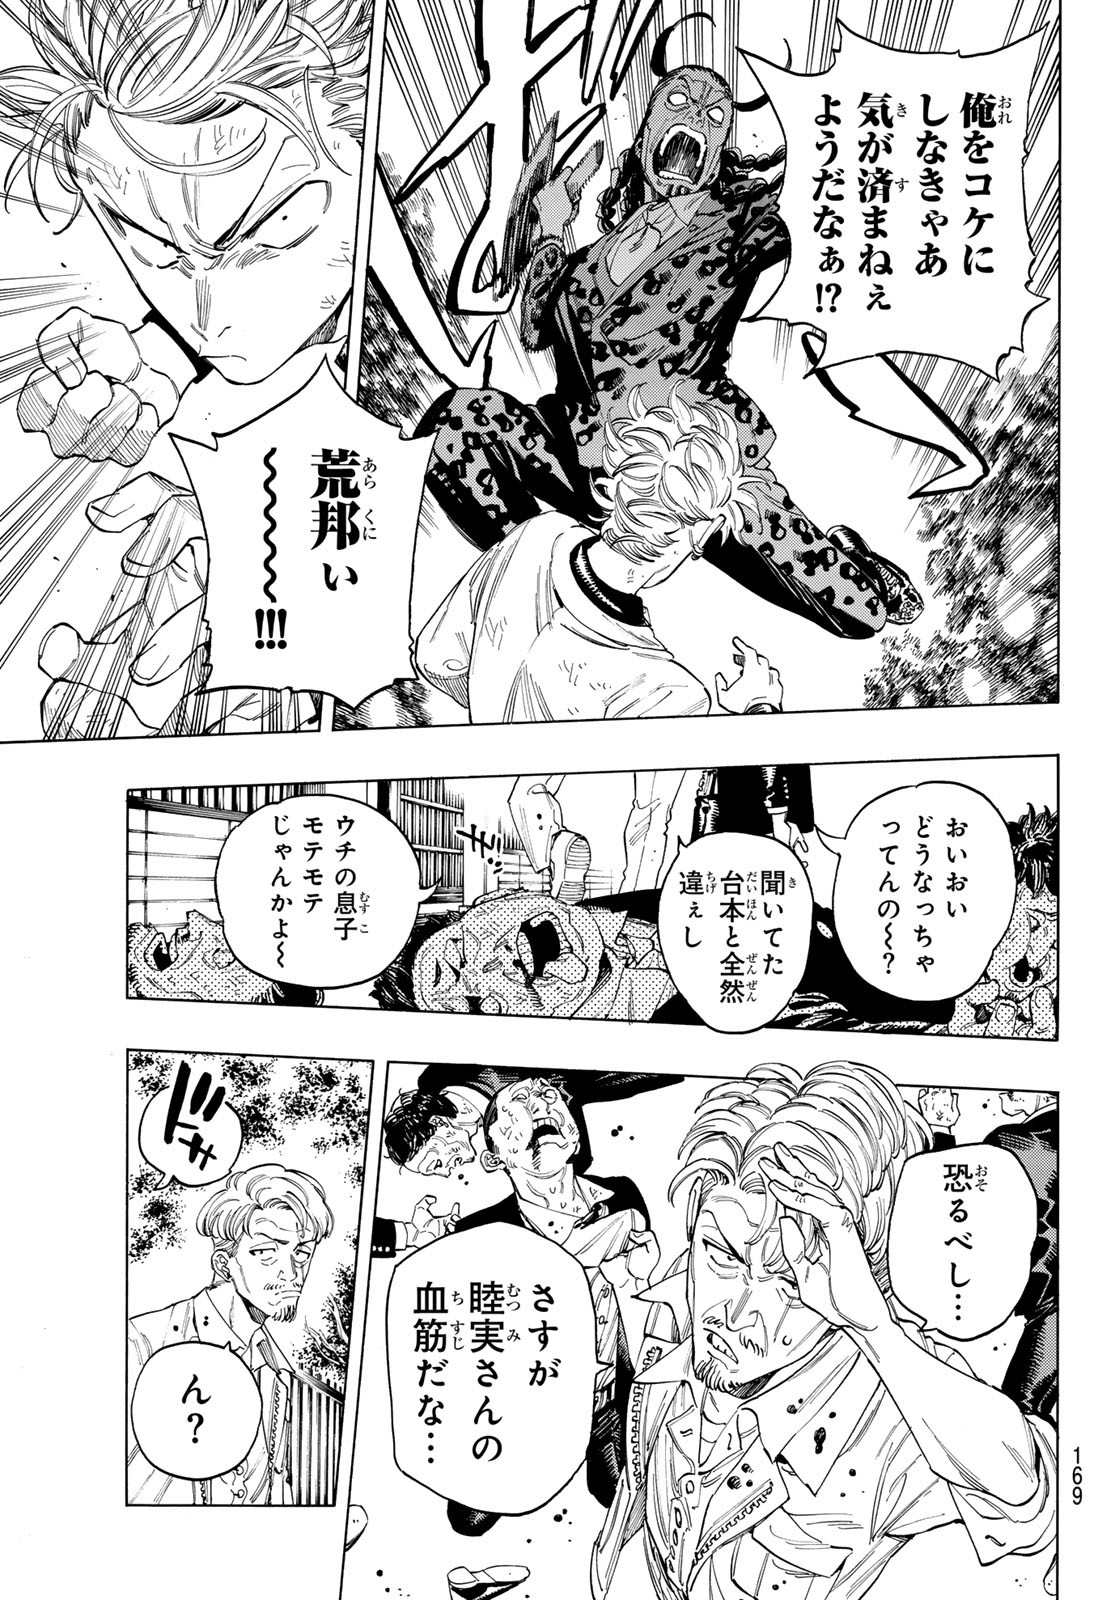 Akabane Honeko no Bodyguard - Chapter 60 - Page 19